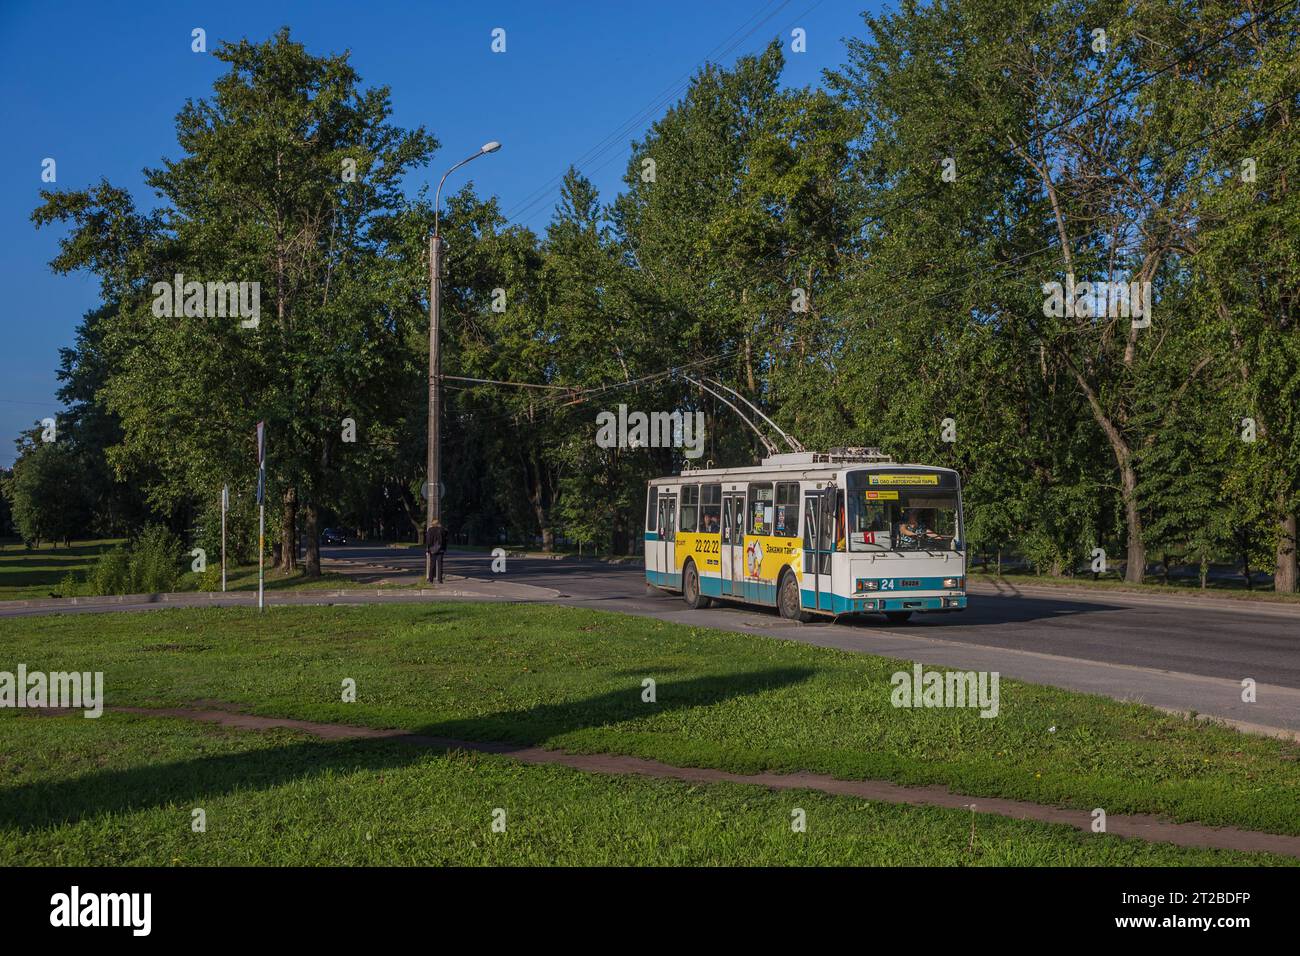 16.07.2019. Russia, Veliky Novgorod. Trolleybus Skoda 14tr. Stock Photo